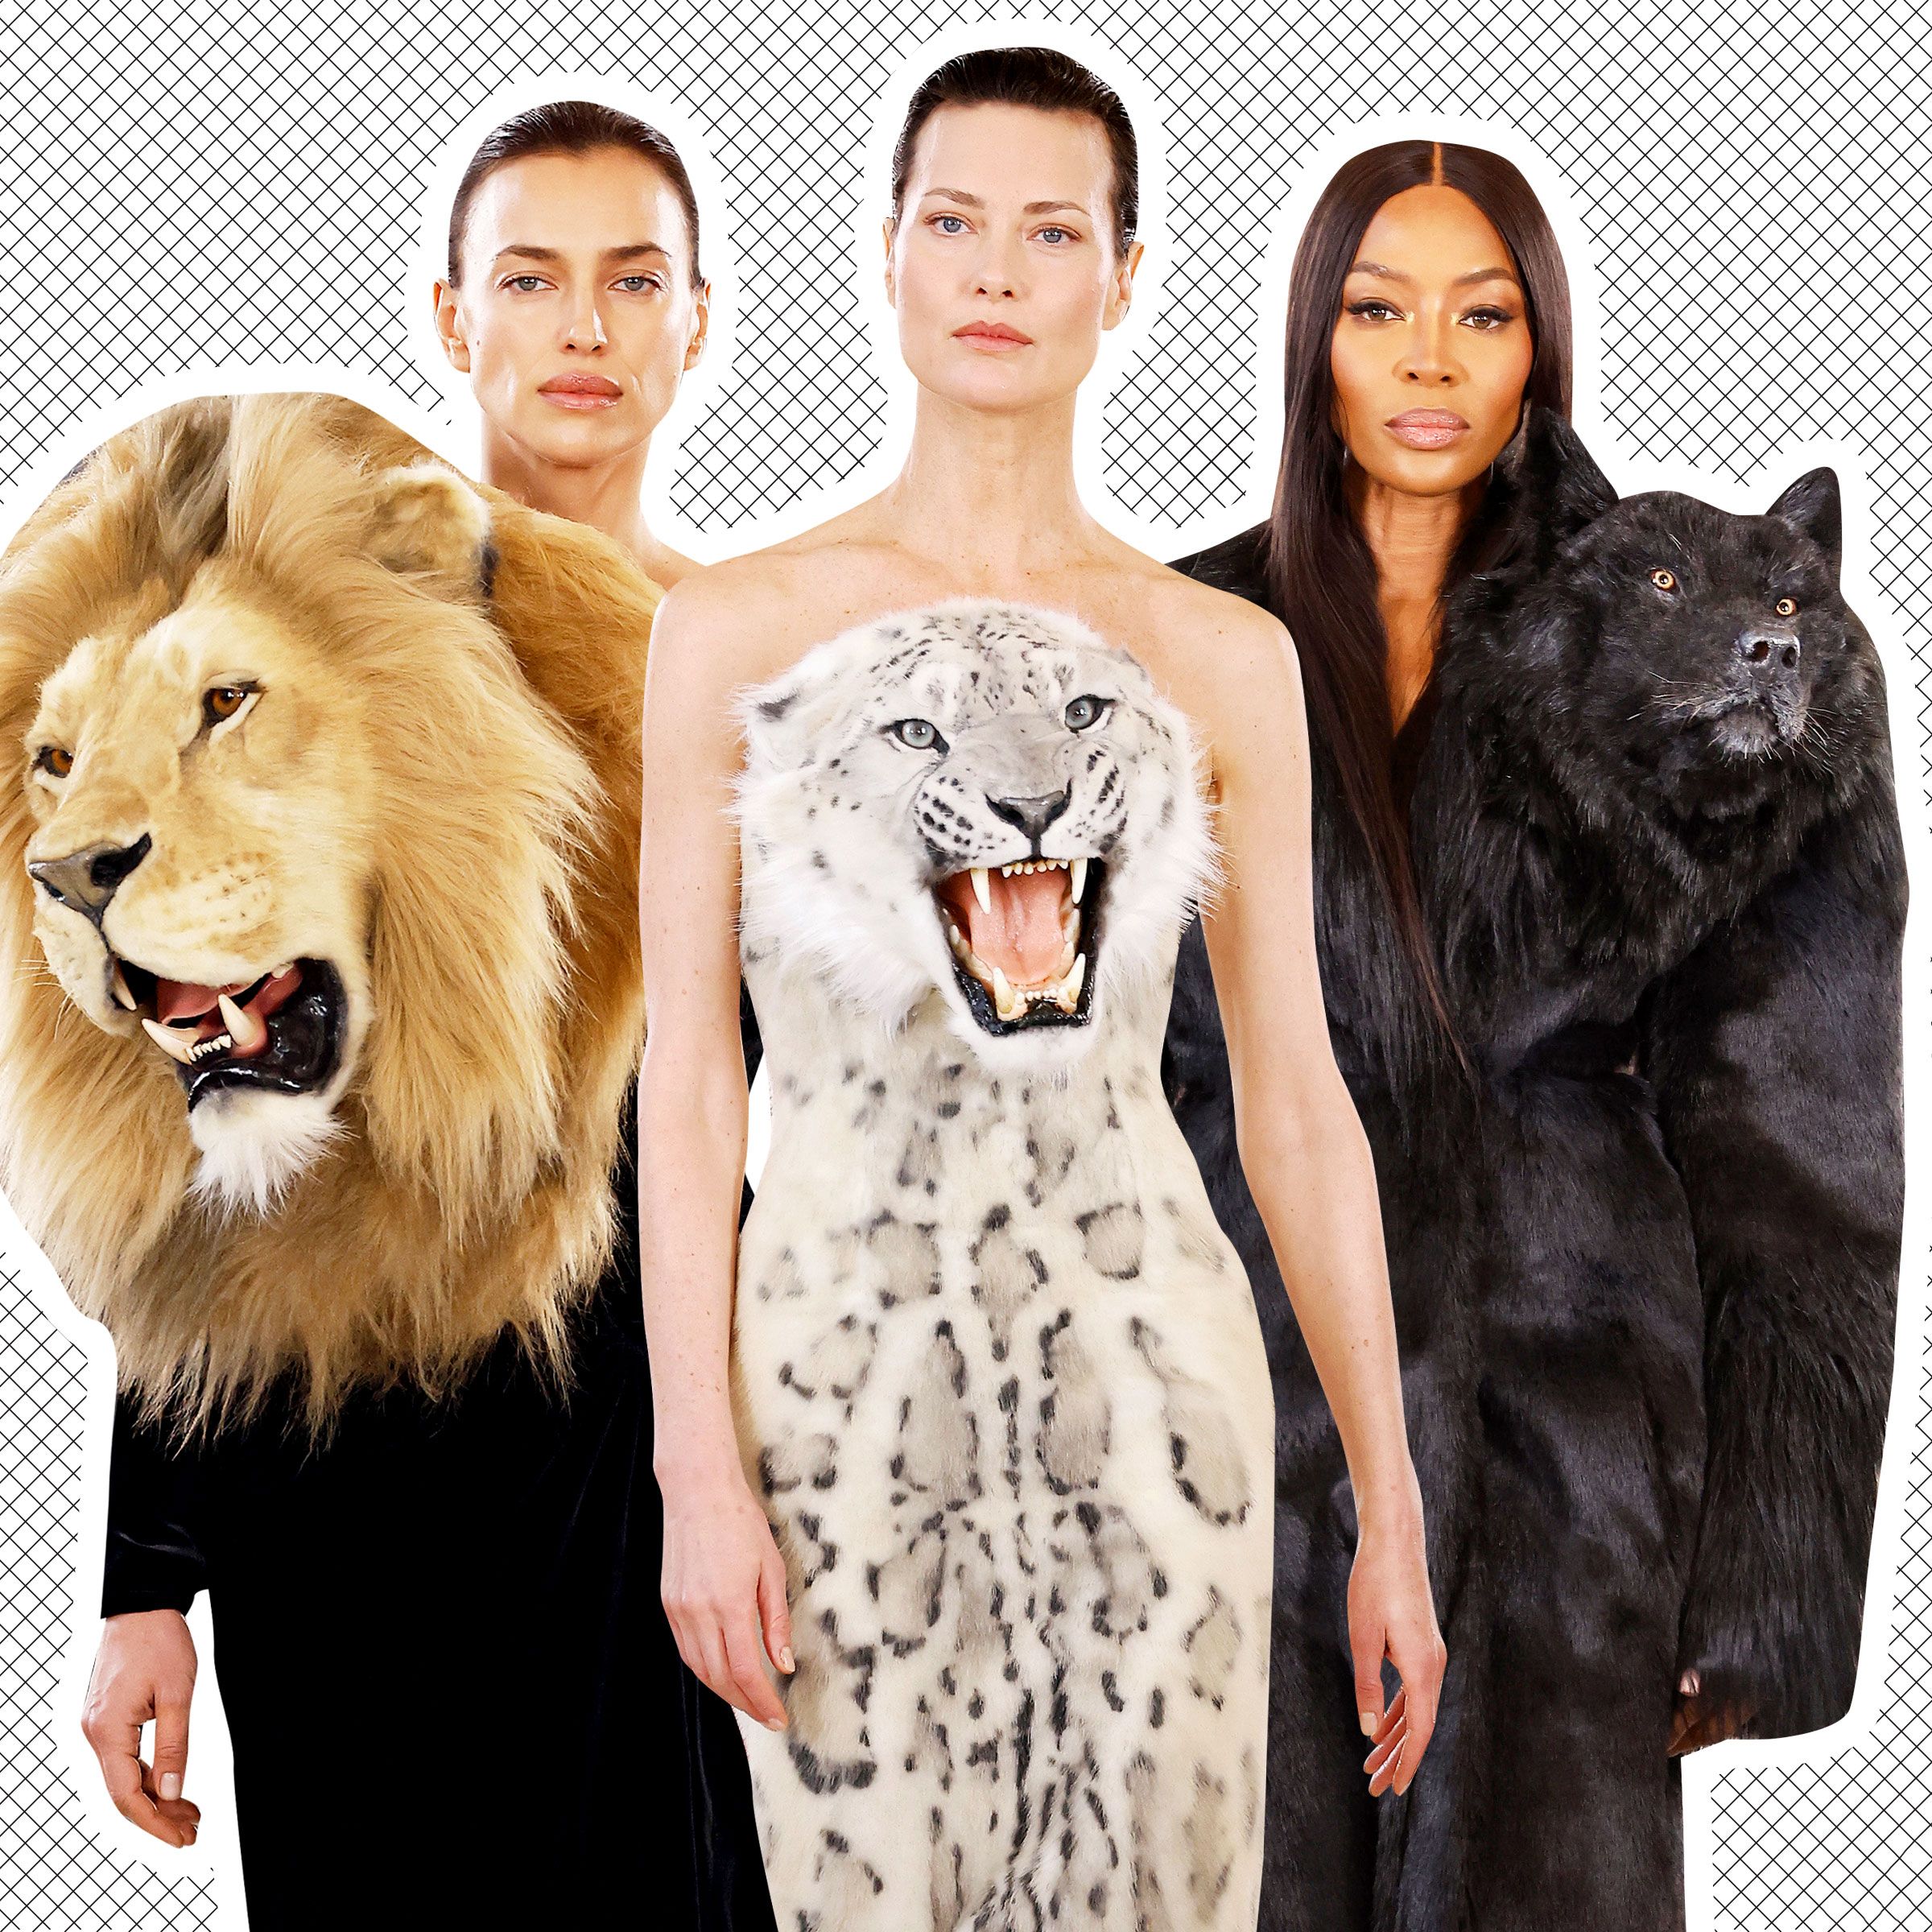 Fake Animal Heads Stir Outrage at Paris Haute Couture Fashion